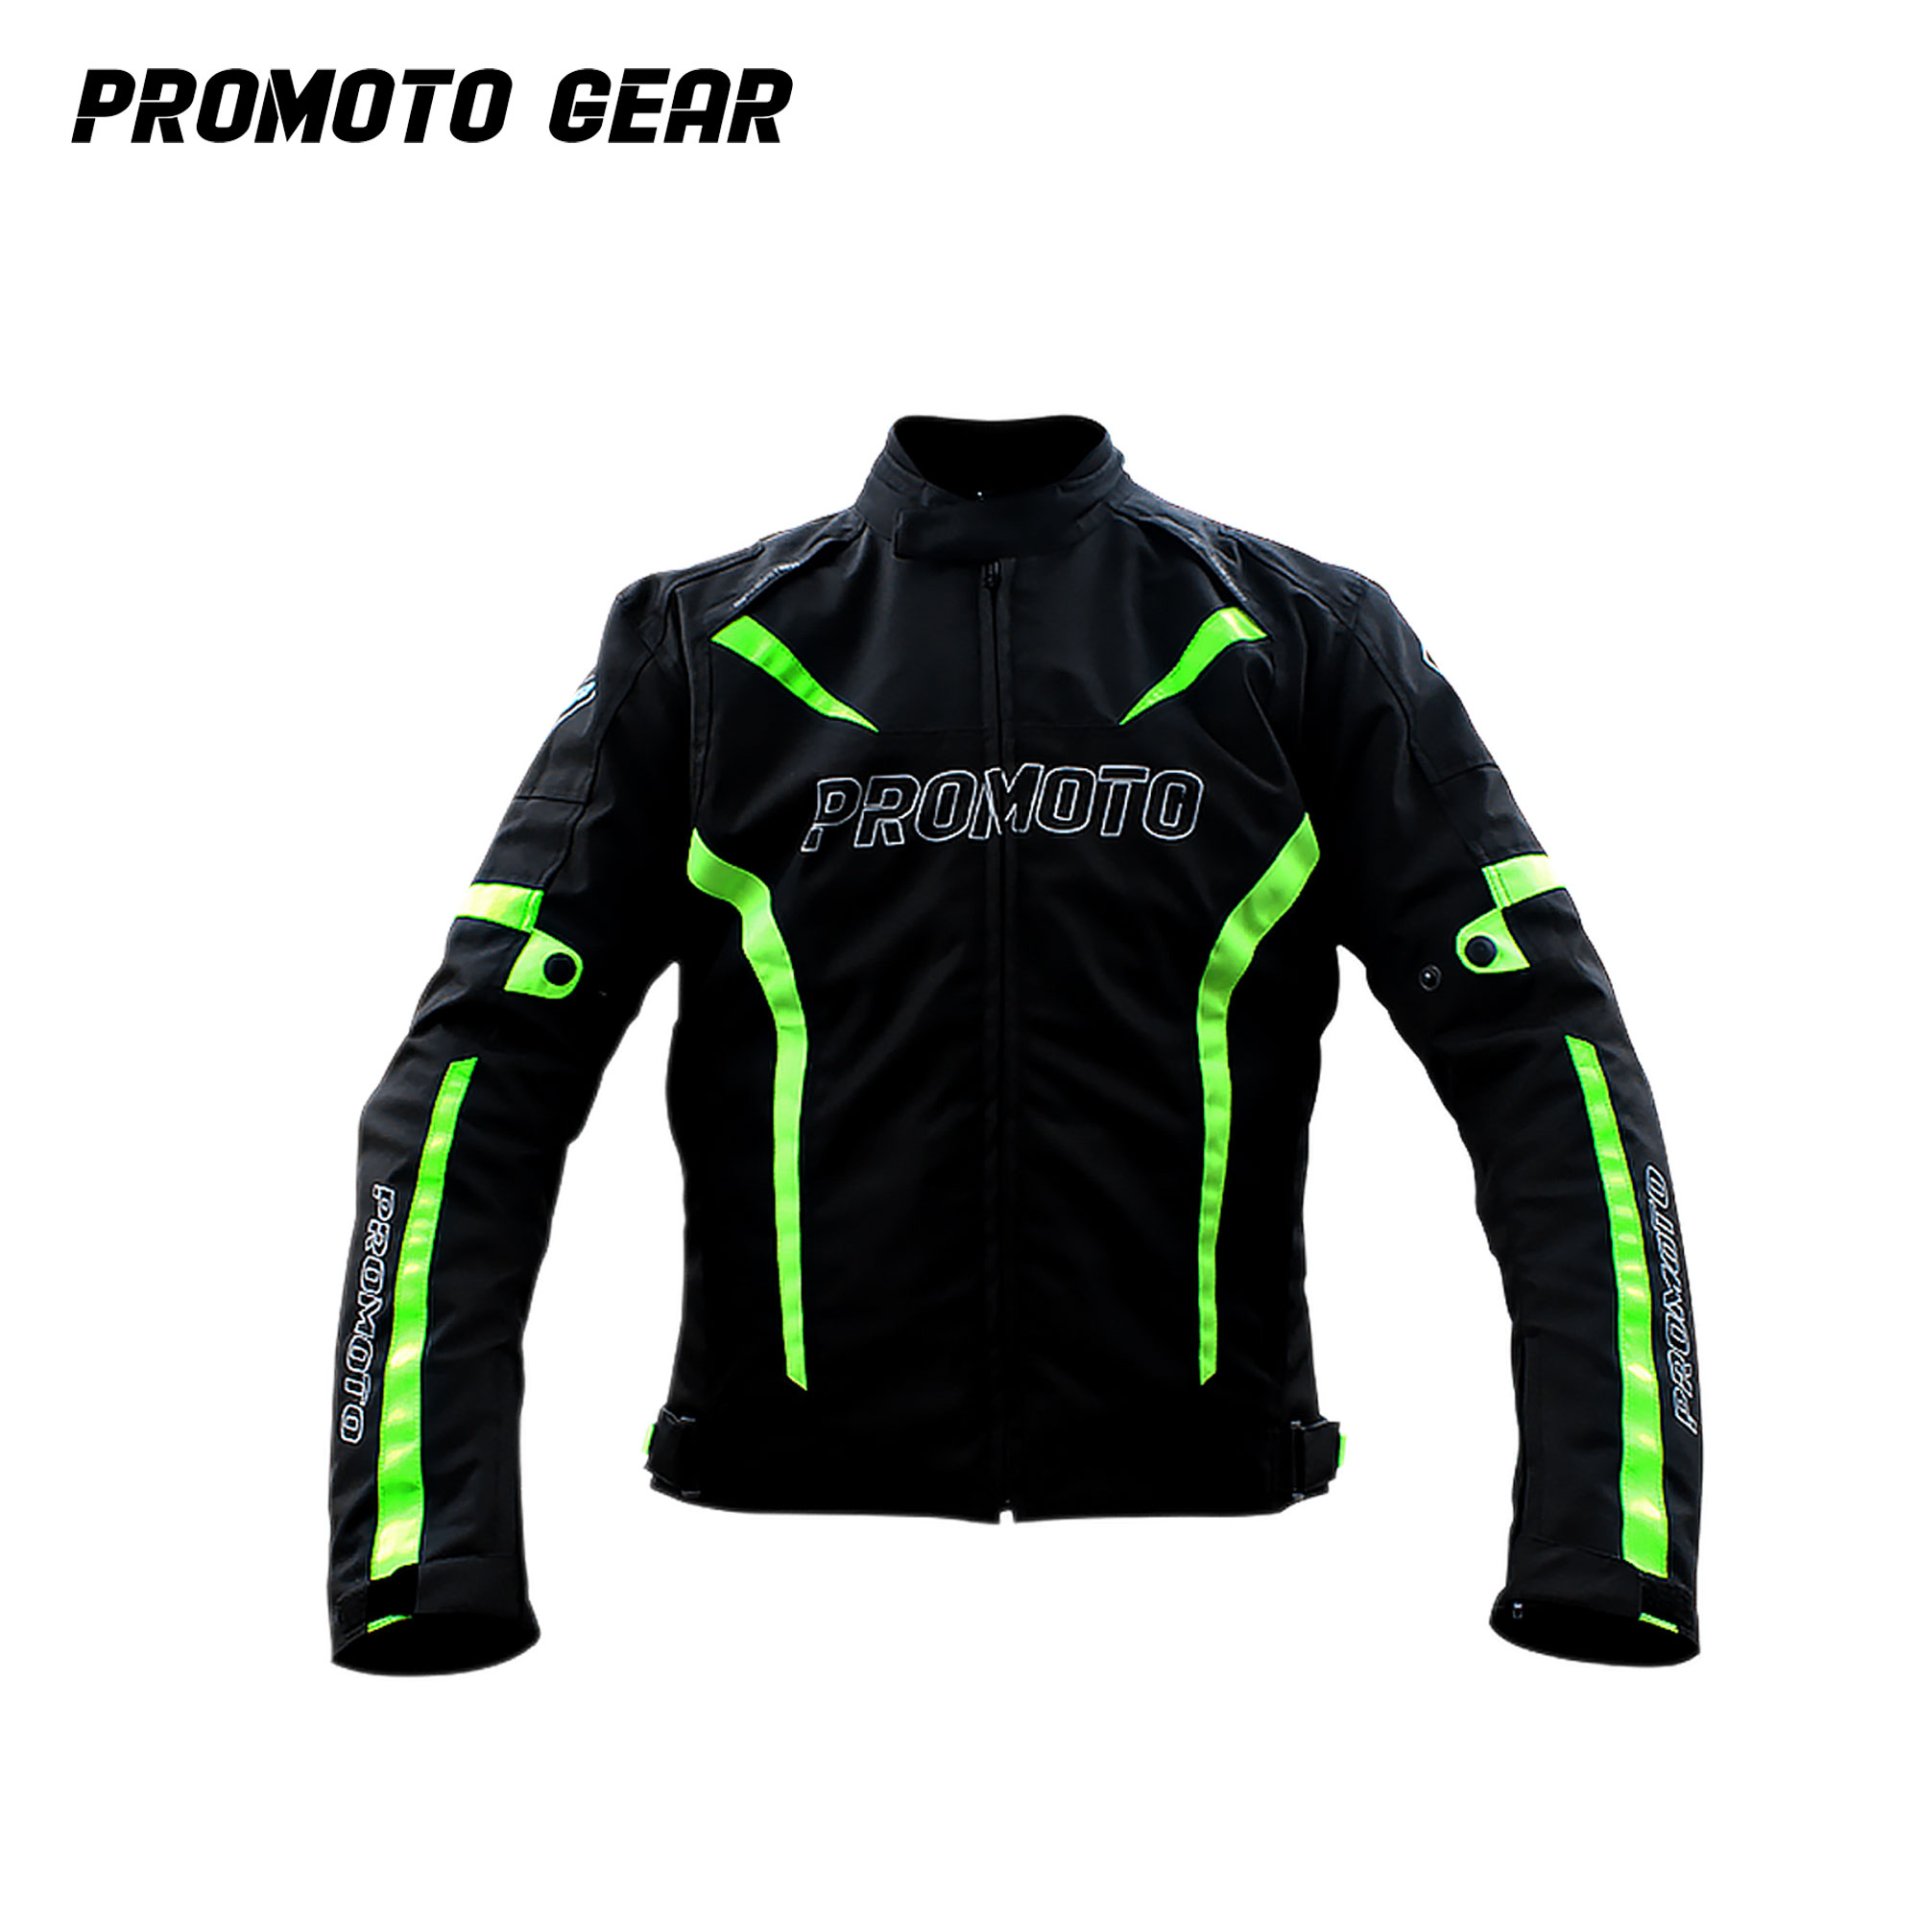 Promoto Gear Motorcycle Jacket